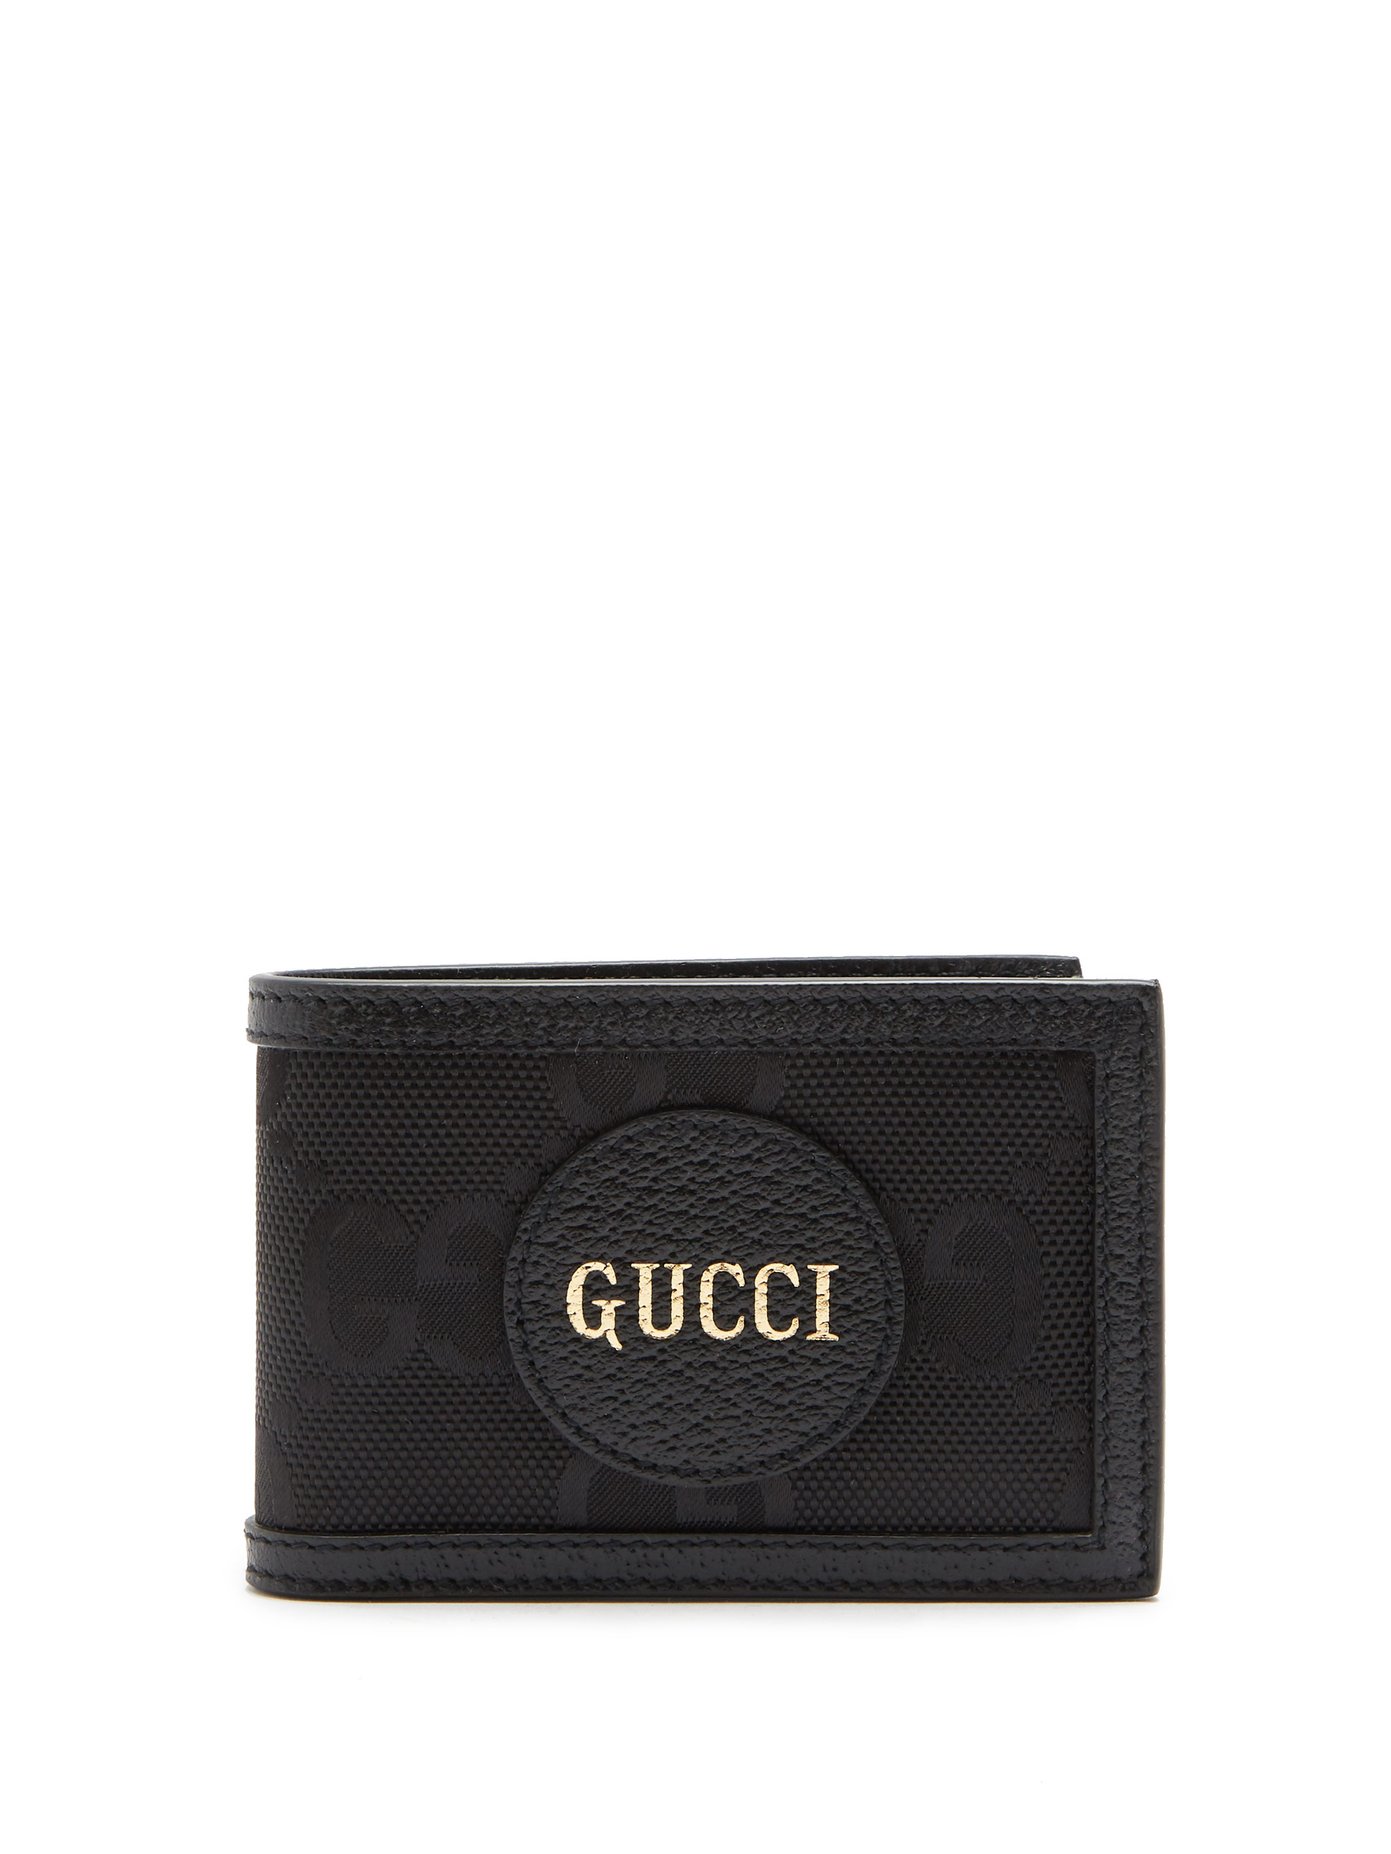 gucci wallet small